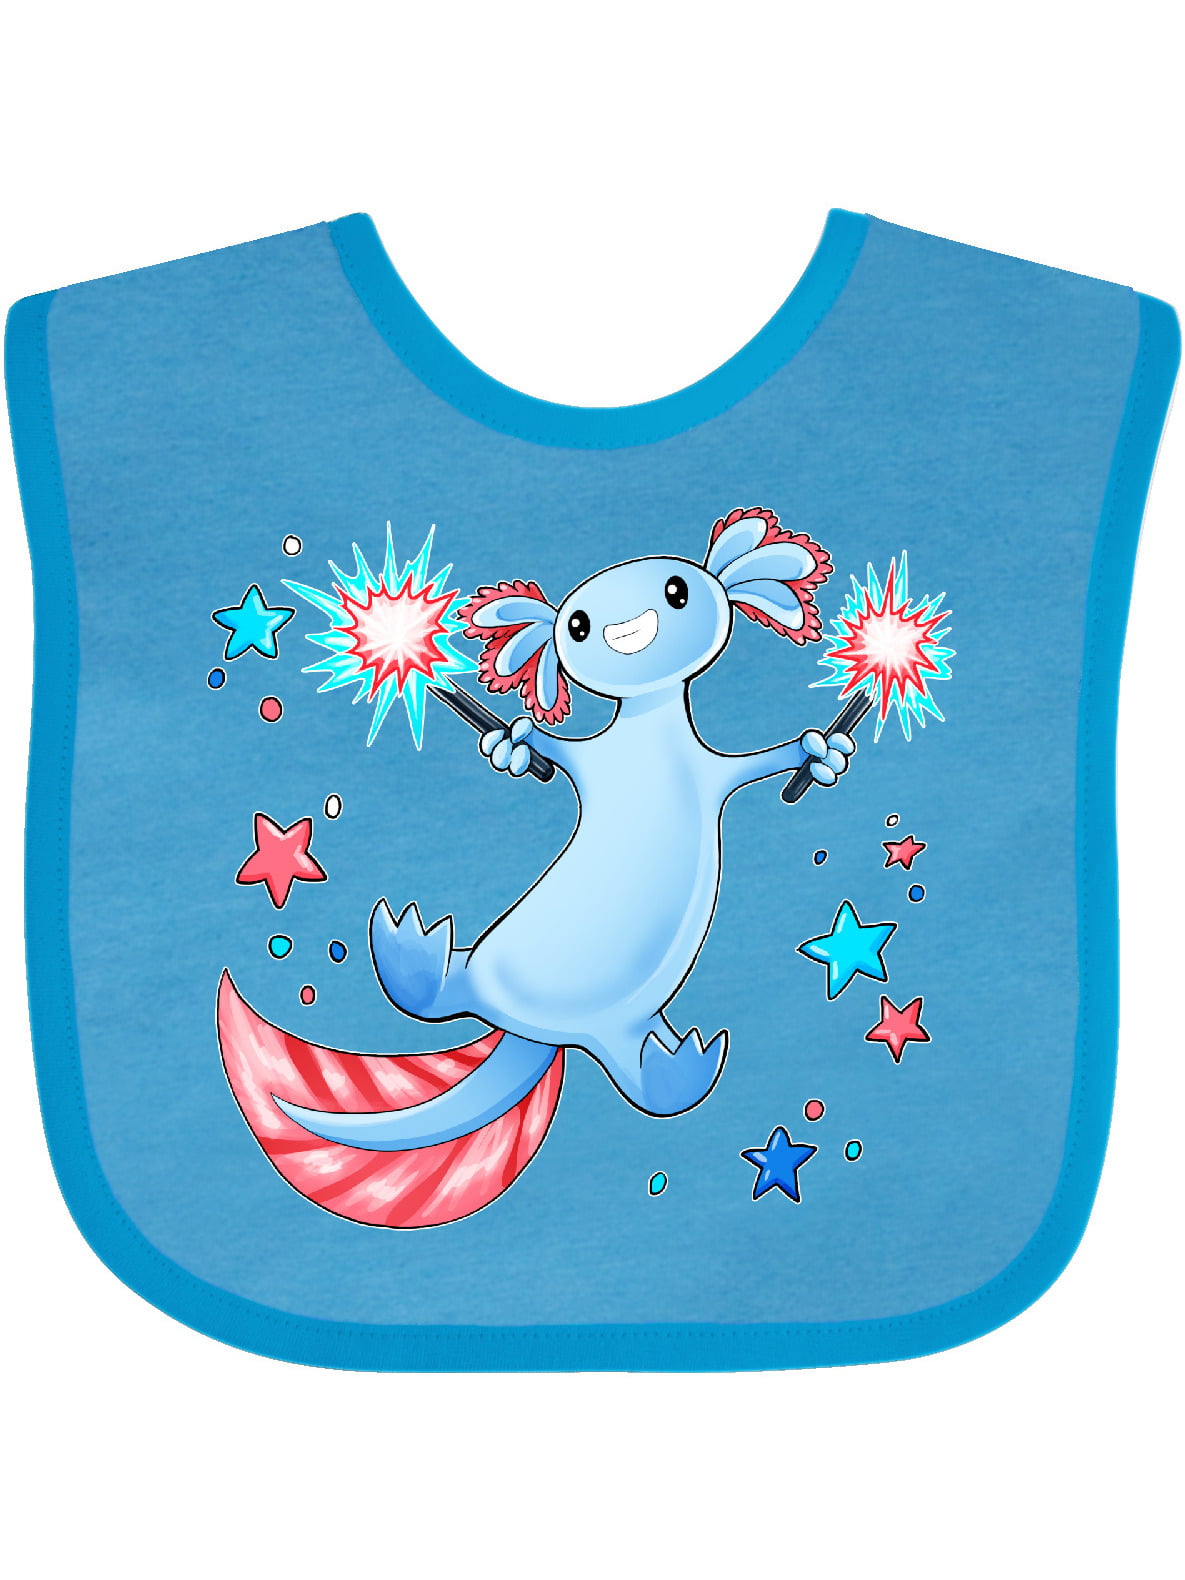 4th Of July Cute Blue Axolotl With Sparklers And Stars Baby Bib Walmart Com Walmart Com